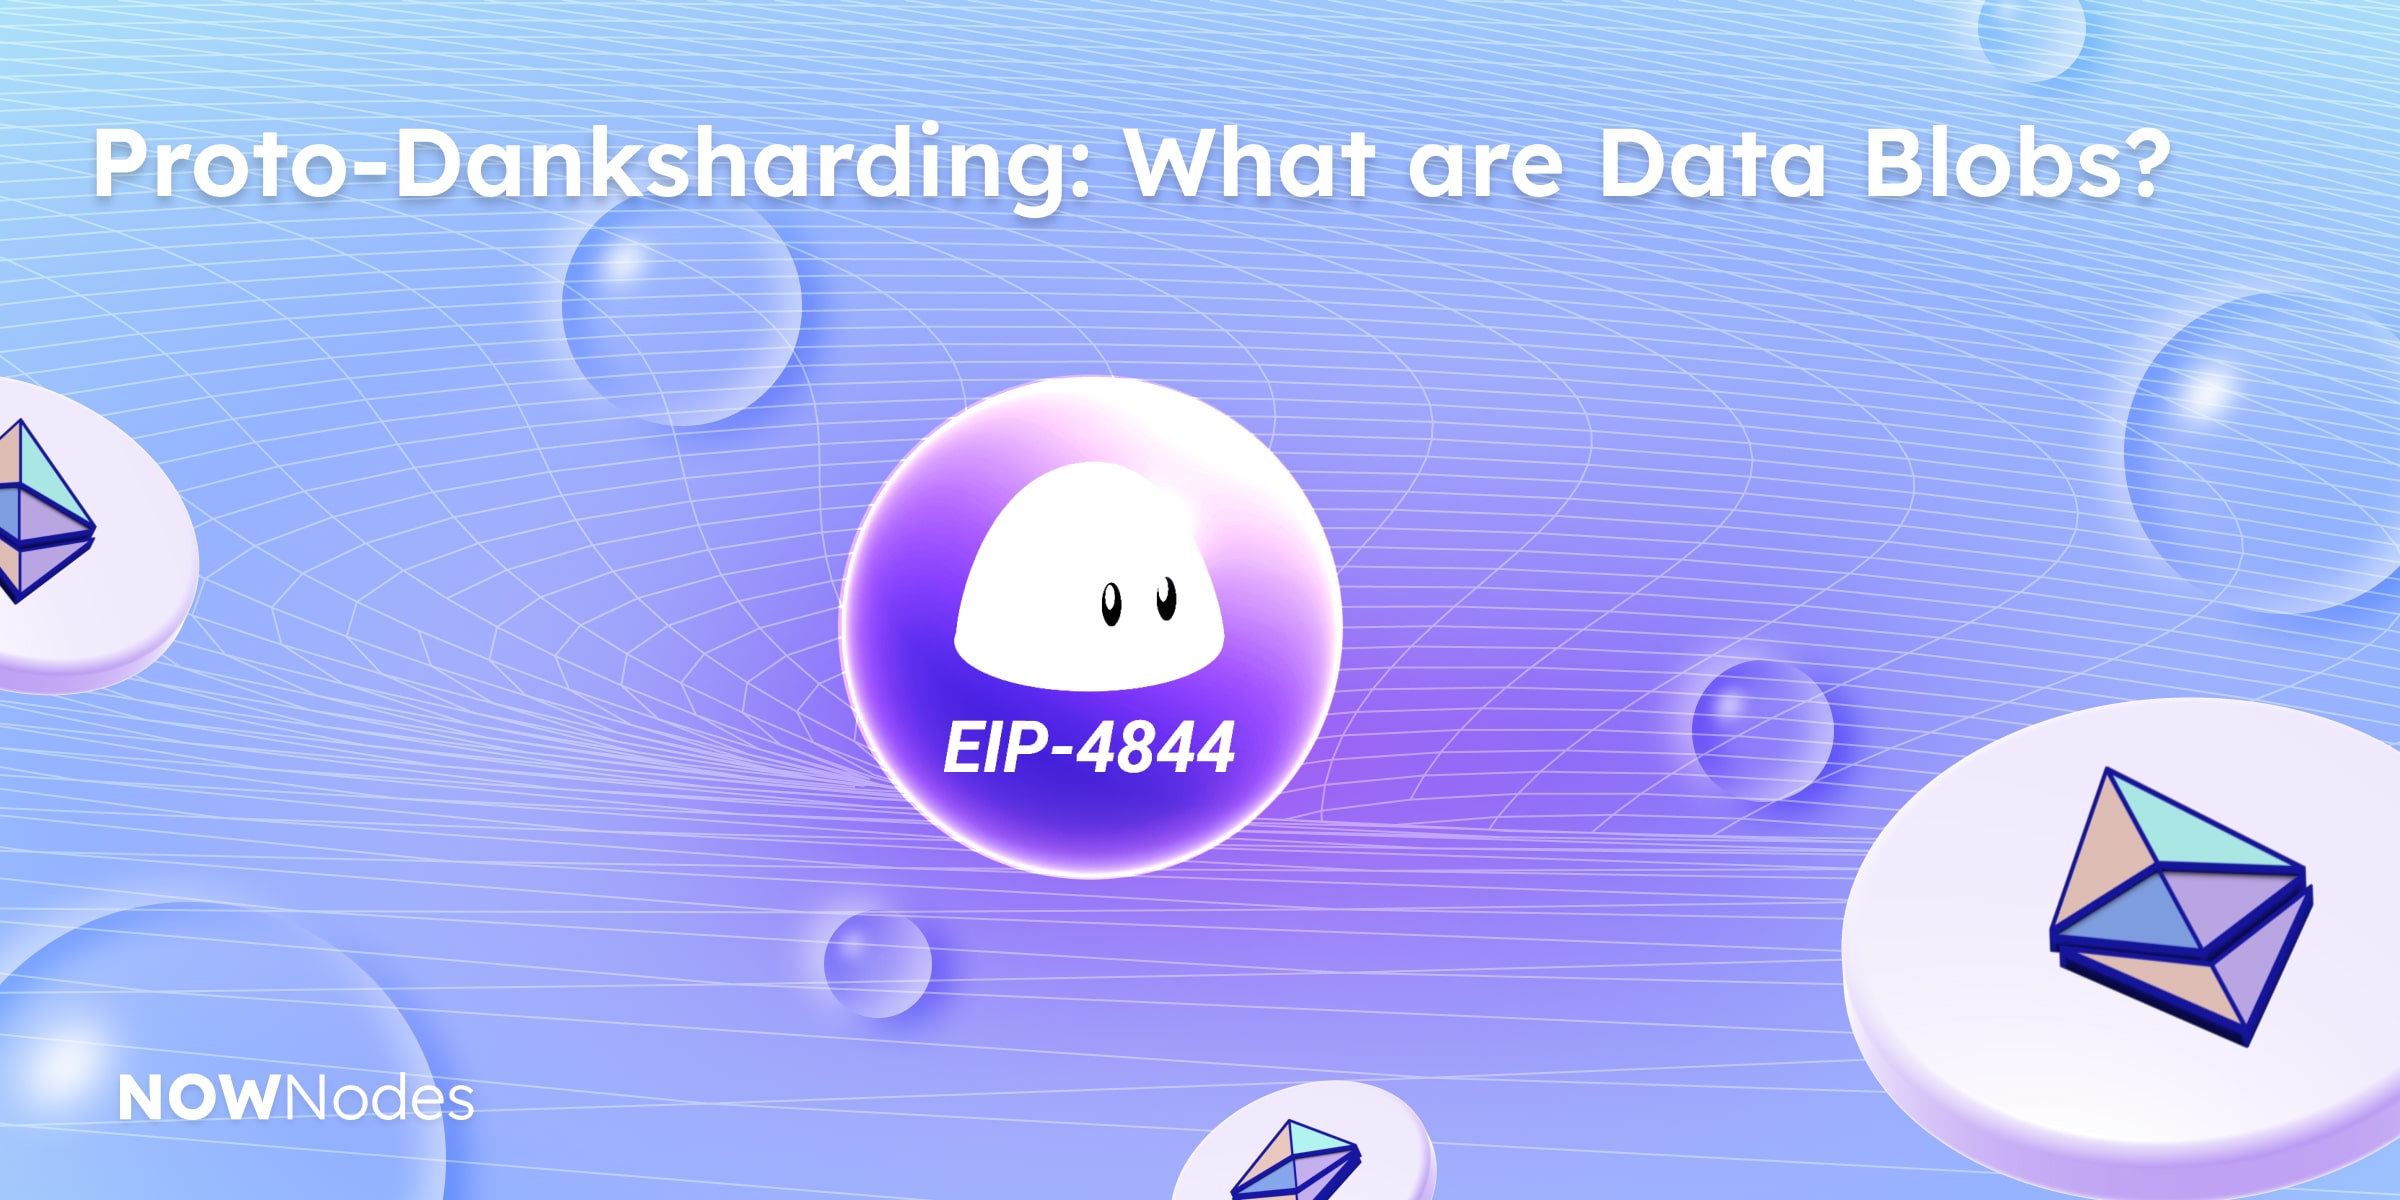 Proto-Danksharding: What are Data Blobs?
NOWNodes 